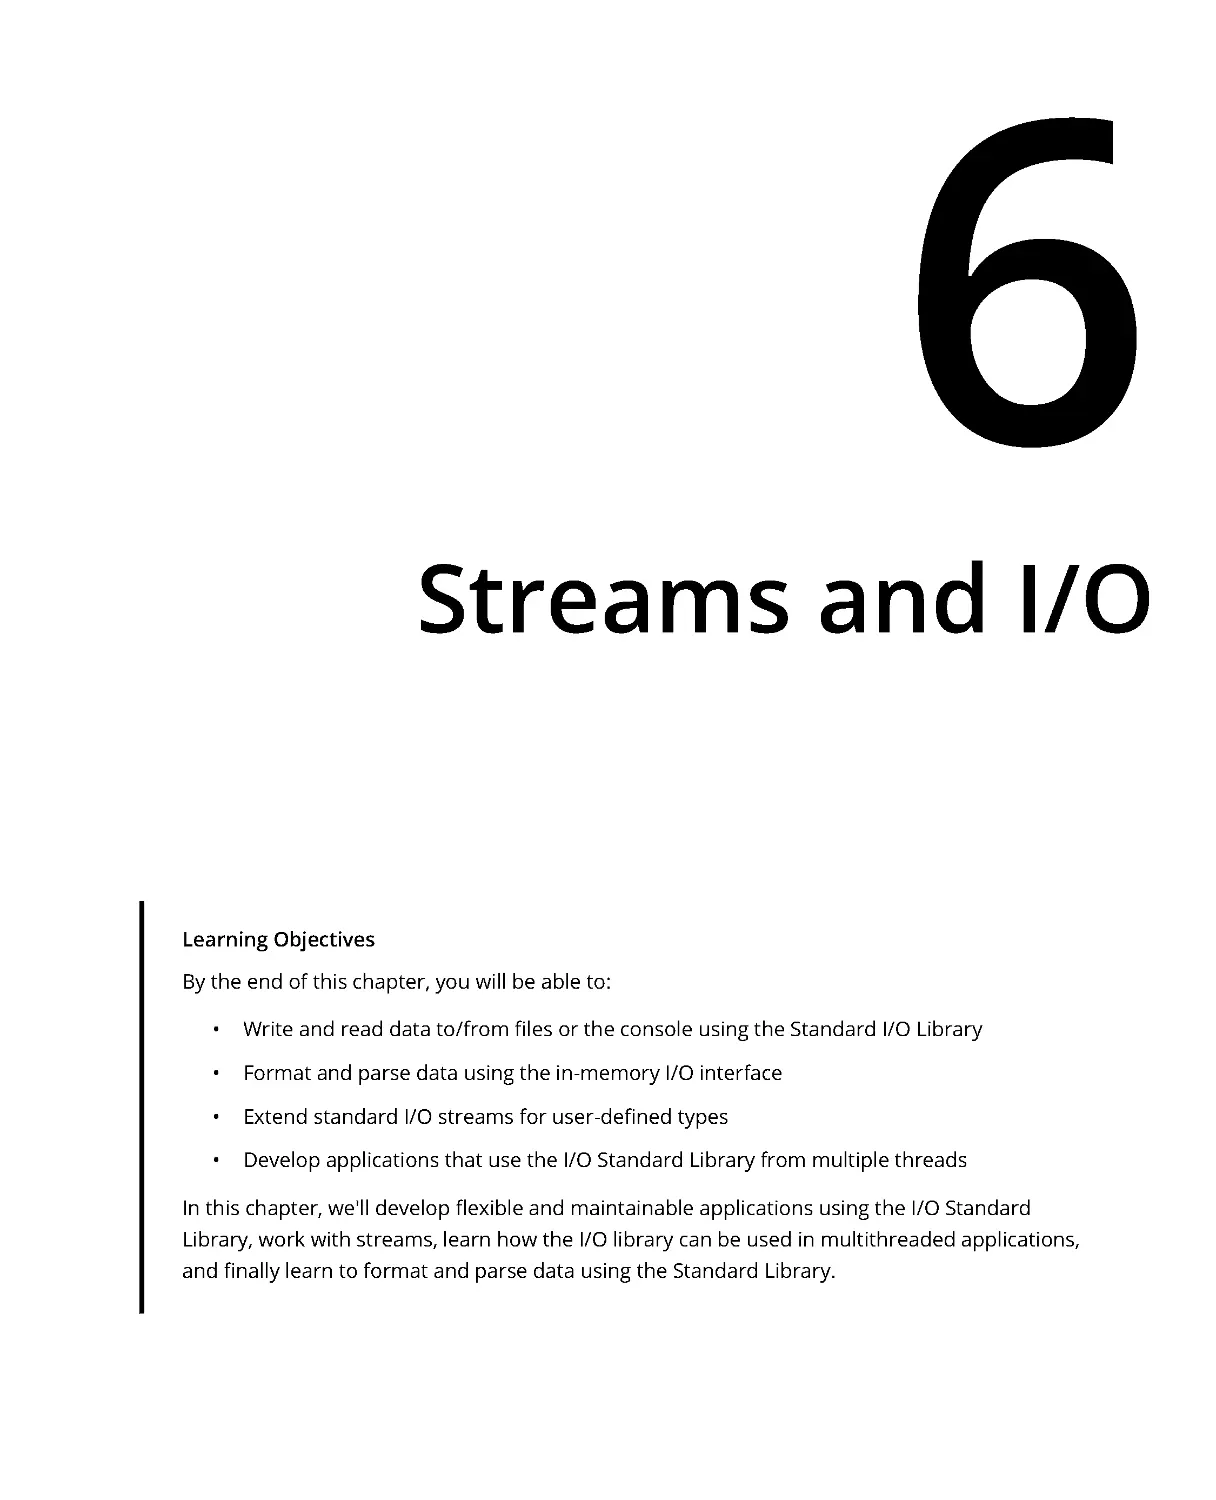 Chapter 6: Streams and I/O